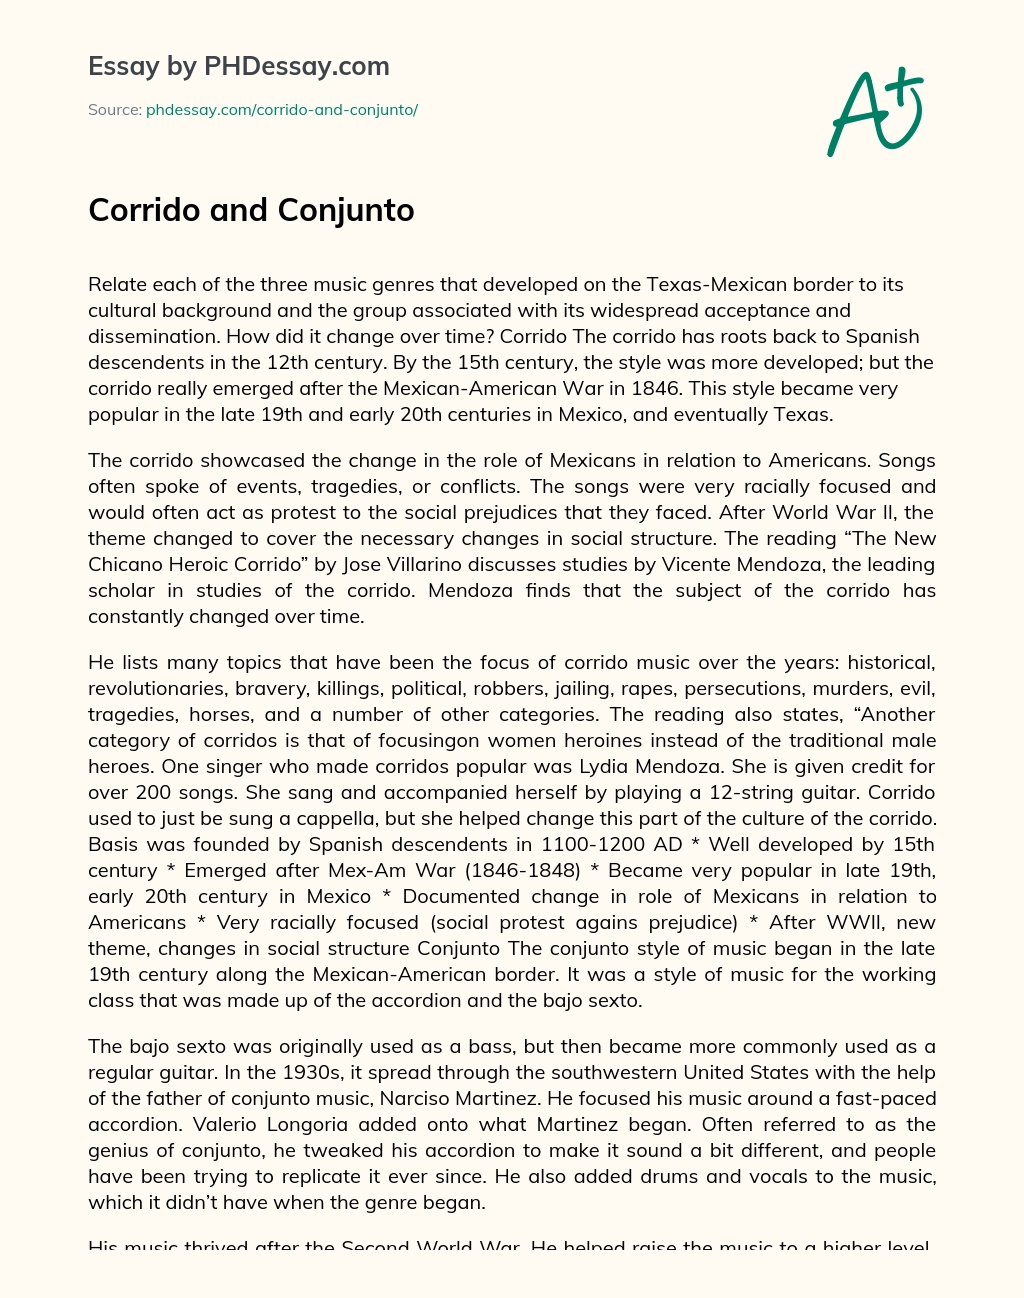 Corrido and Conjunto essay